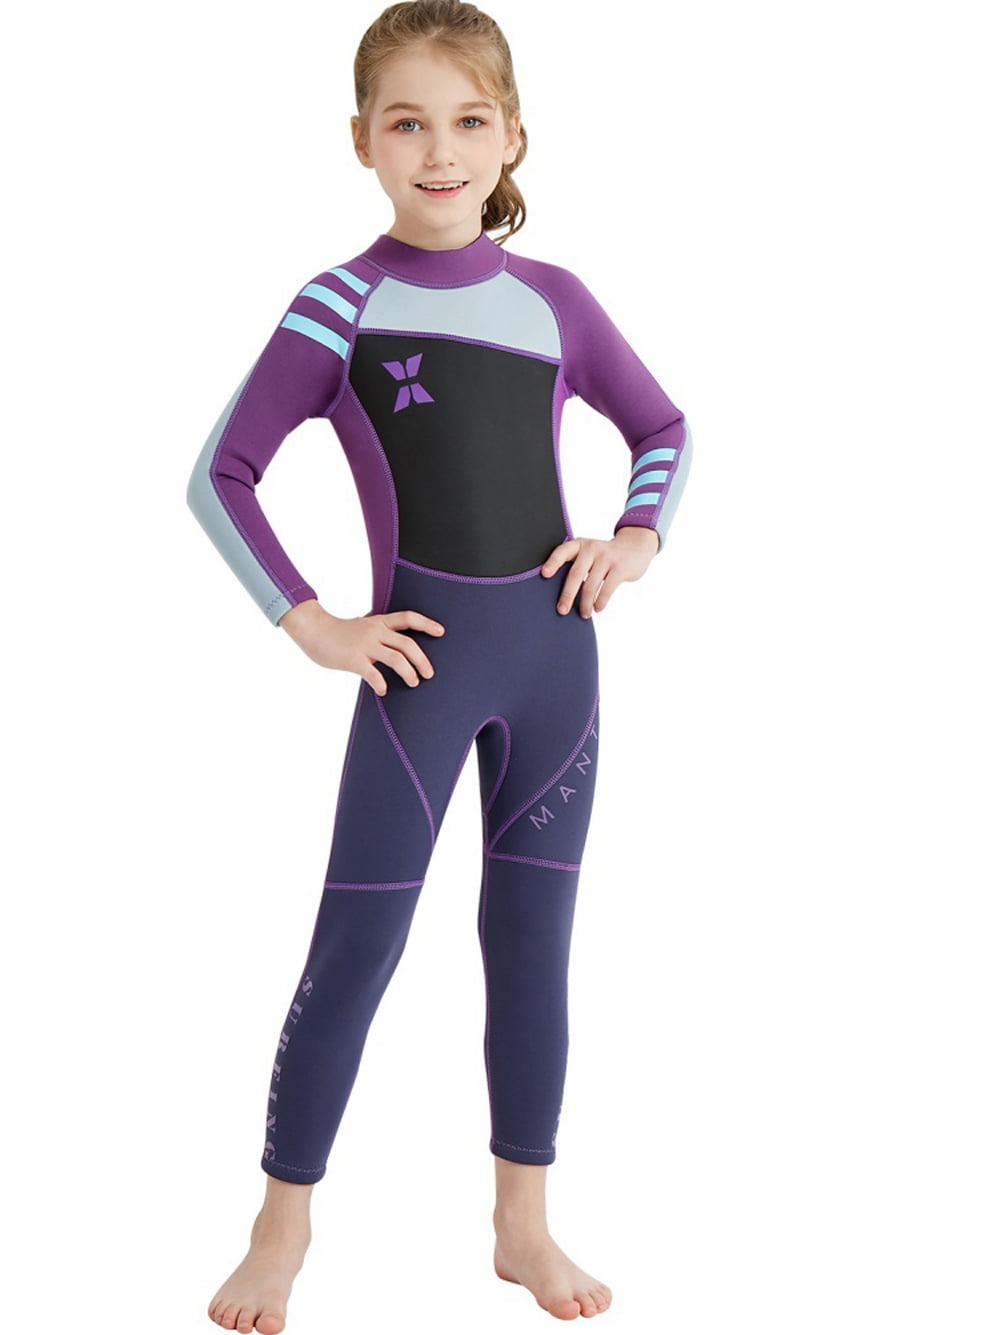 Slinx 2mm Neoprene Swimsuit Kids One Piece Wetsuits Long Sleeve Boys Girls 